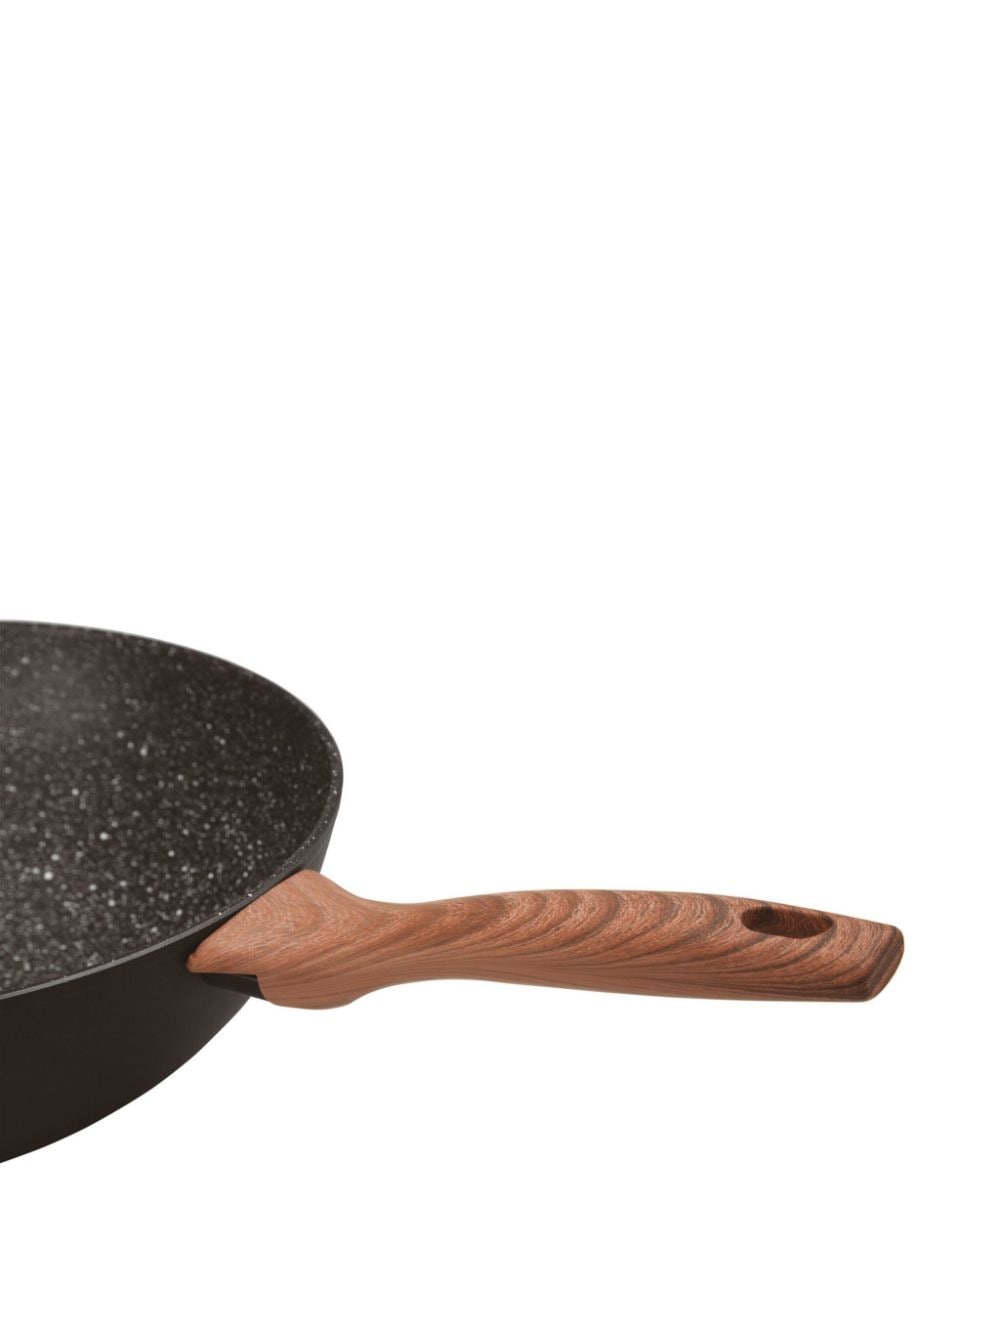 Sambonet aluminium frying pan (set of two) - Zwart